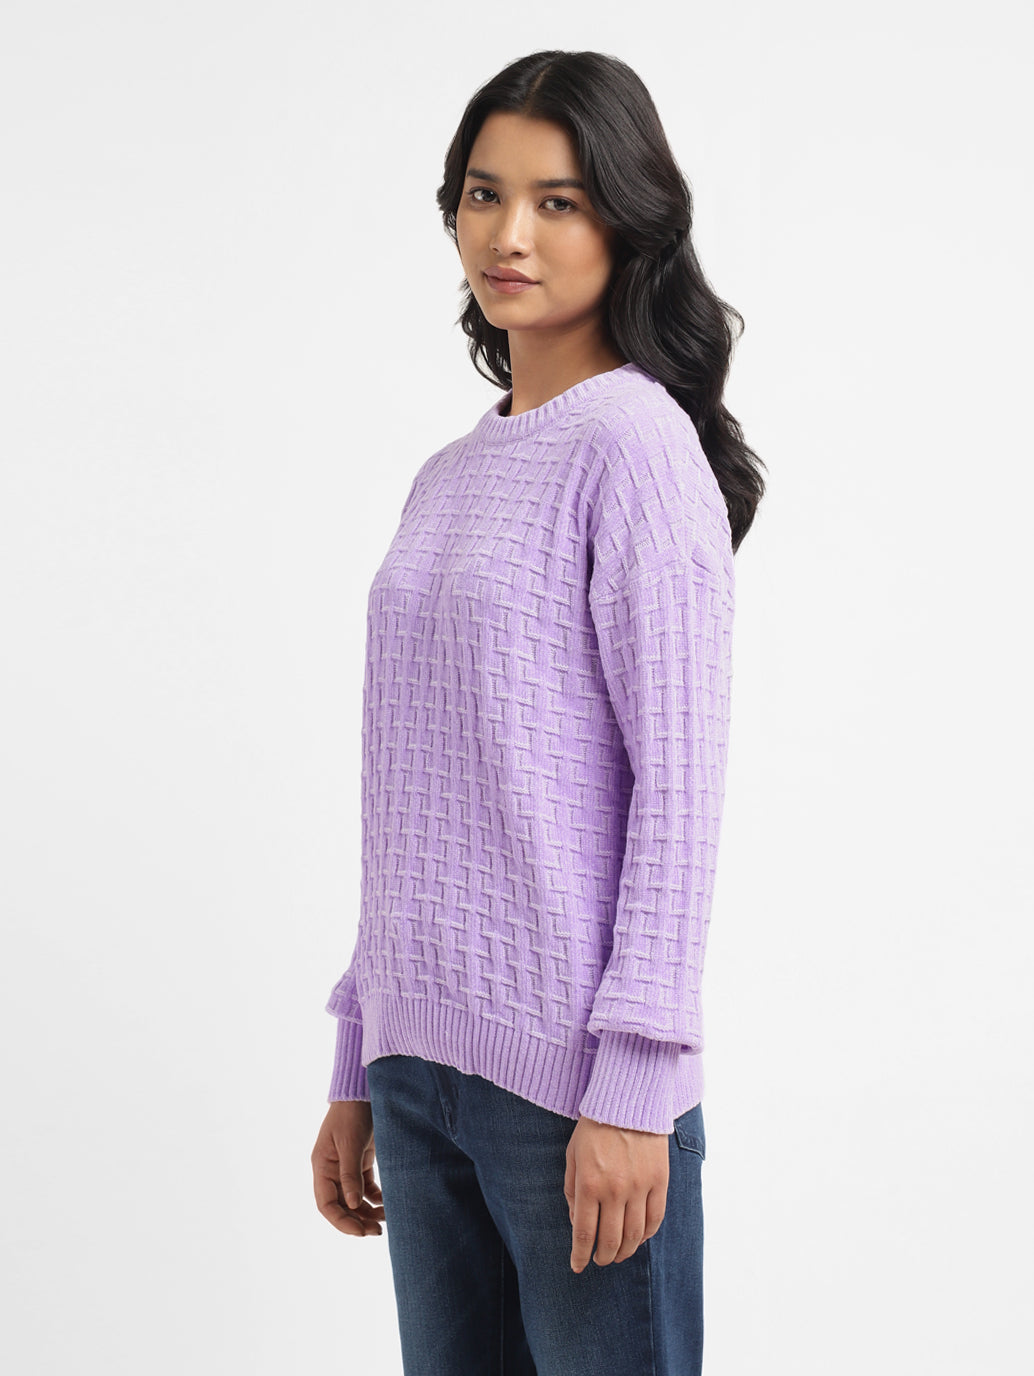 Women's Textured Purple Crew Neck Sweater